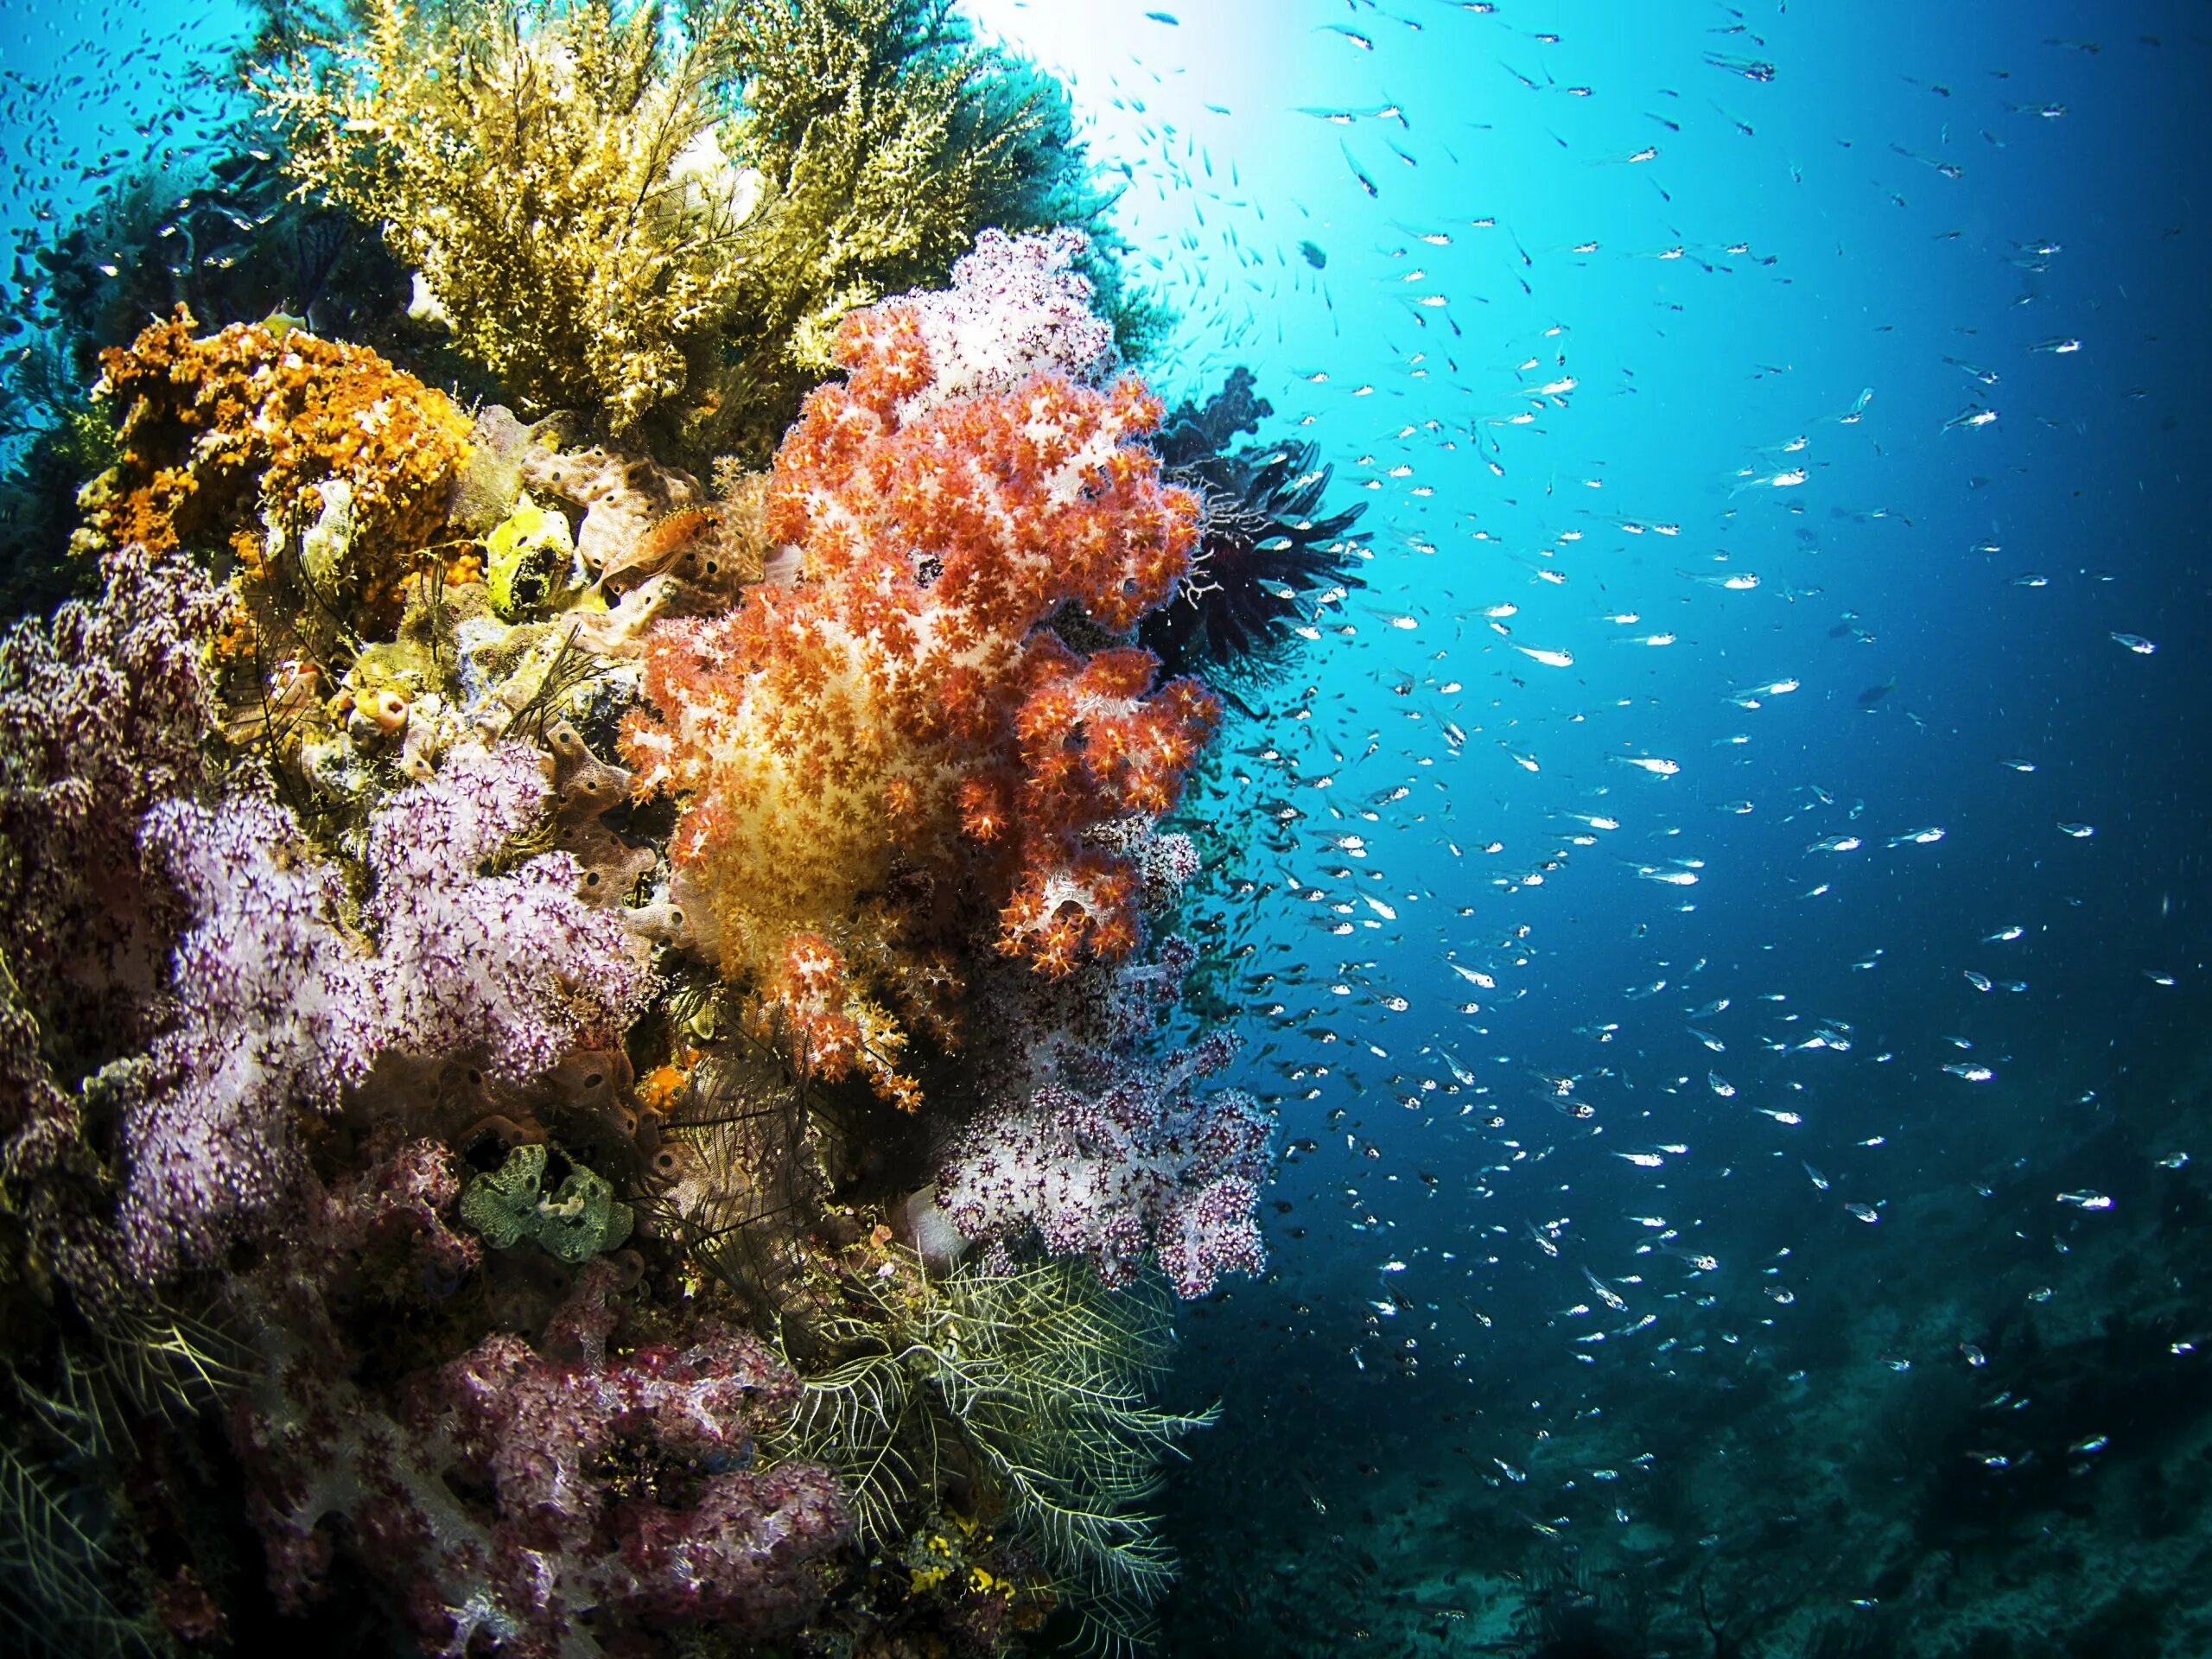 Картинка на дне моря. Раджа-Ампат рифы. Риф красного моря глубины. Морские водоросли на рифе. Водоросли кораллового рифа.